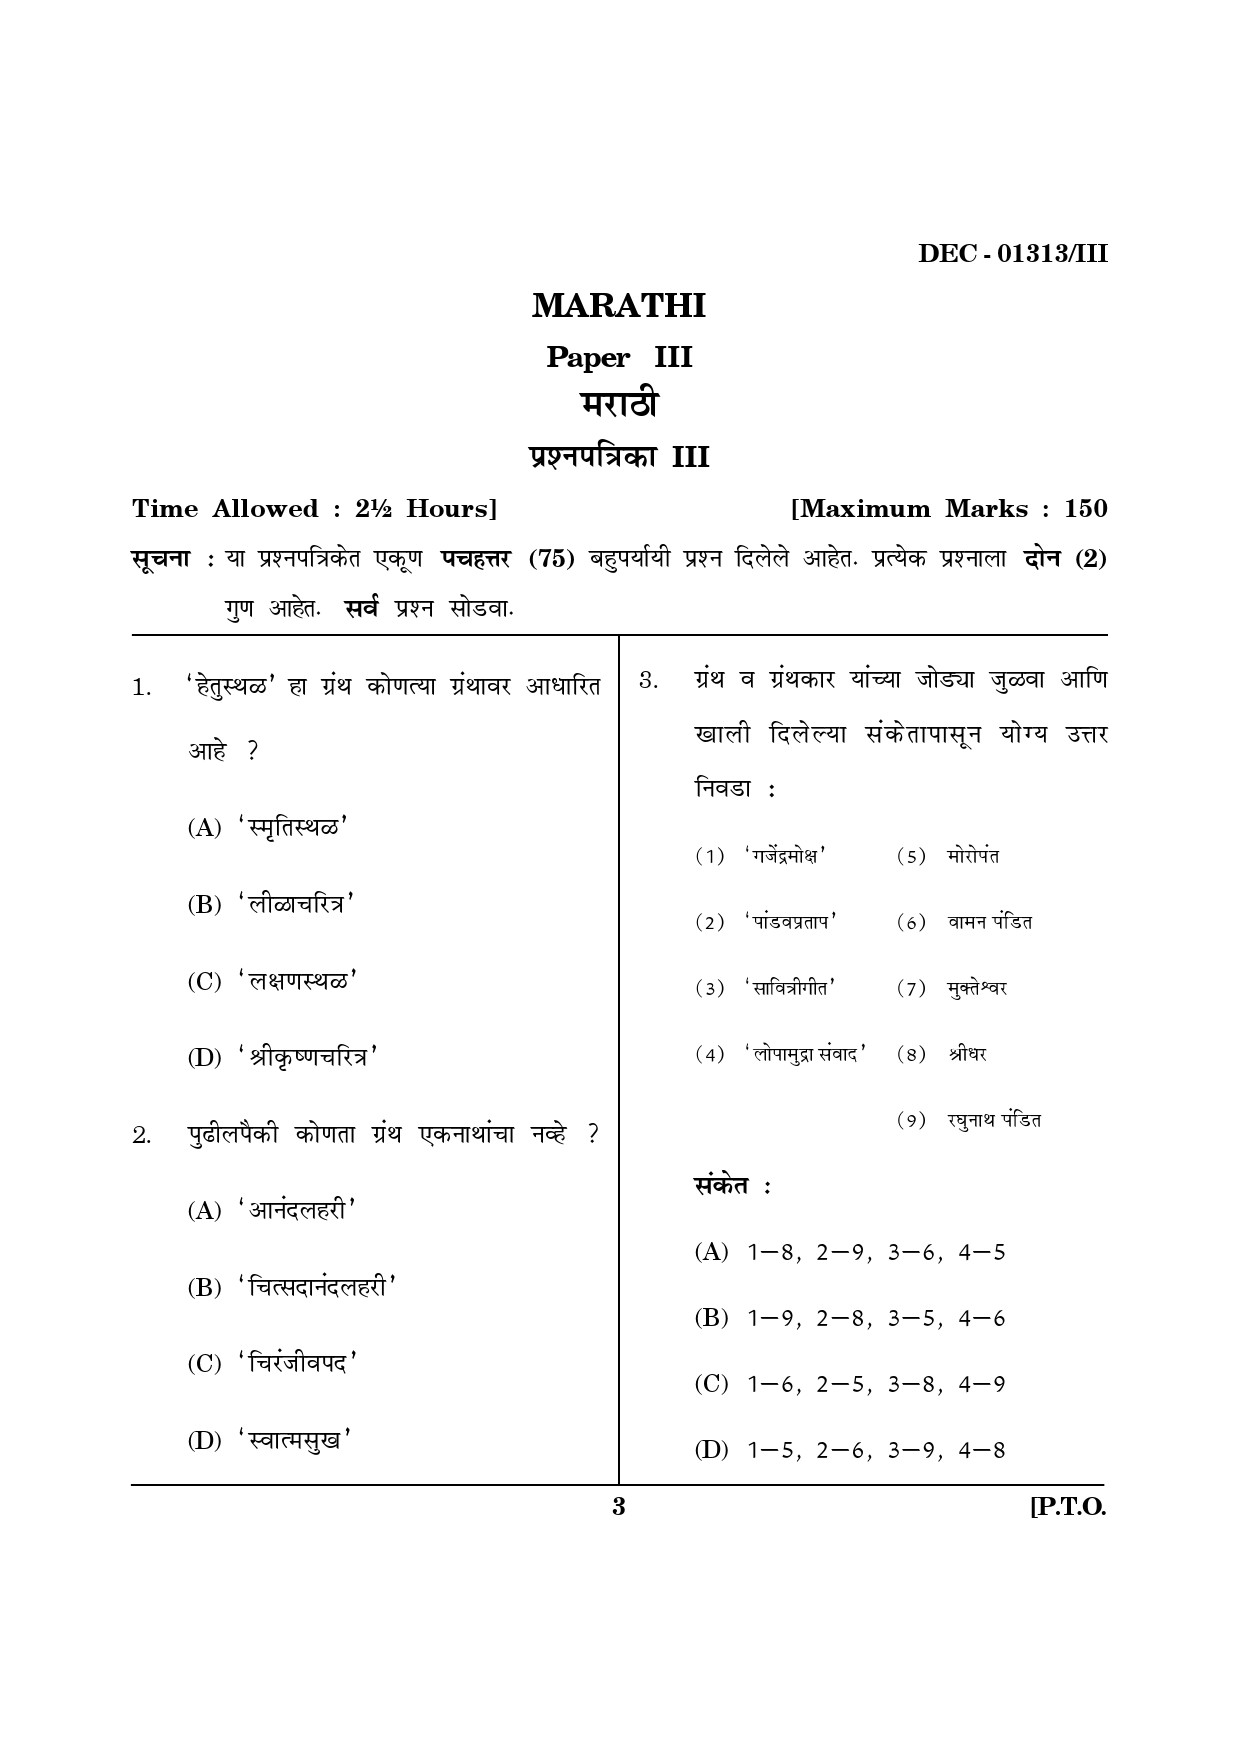 Maharashtra SET Marathi Question Paper III December 2013 2